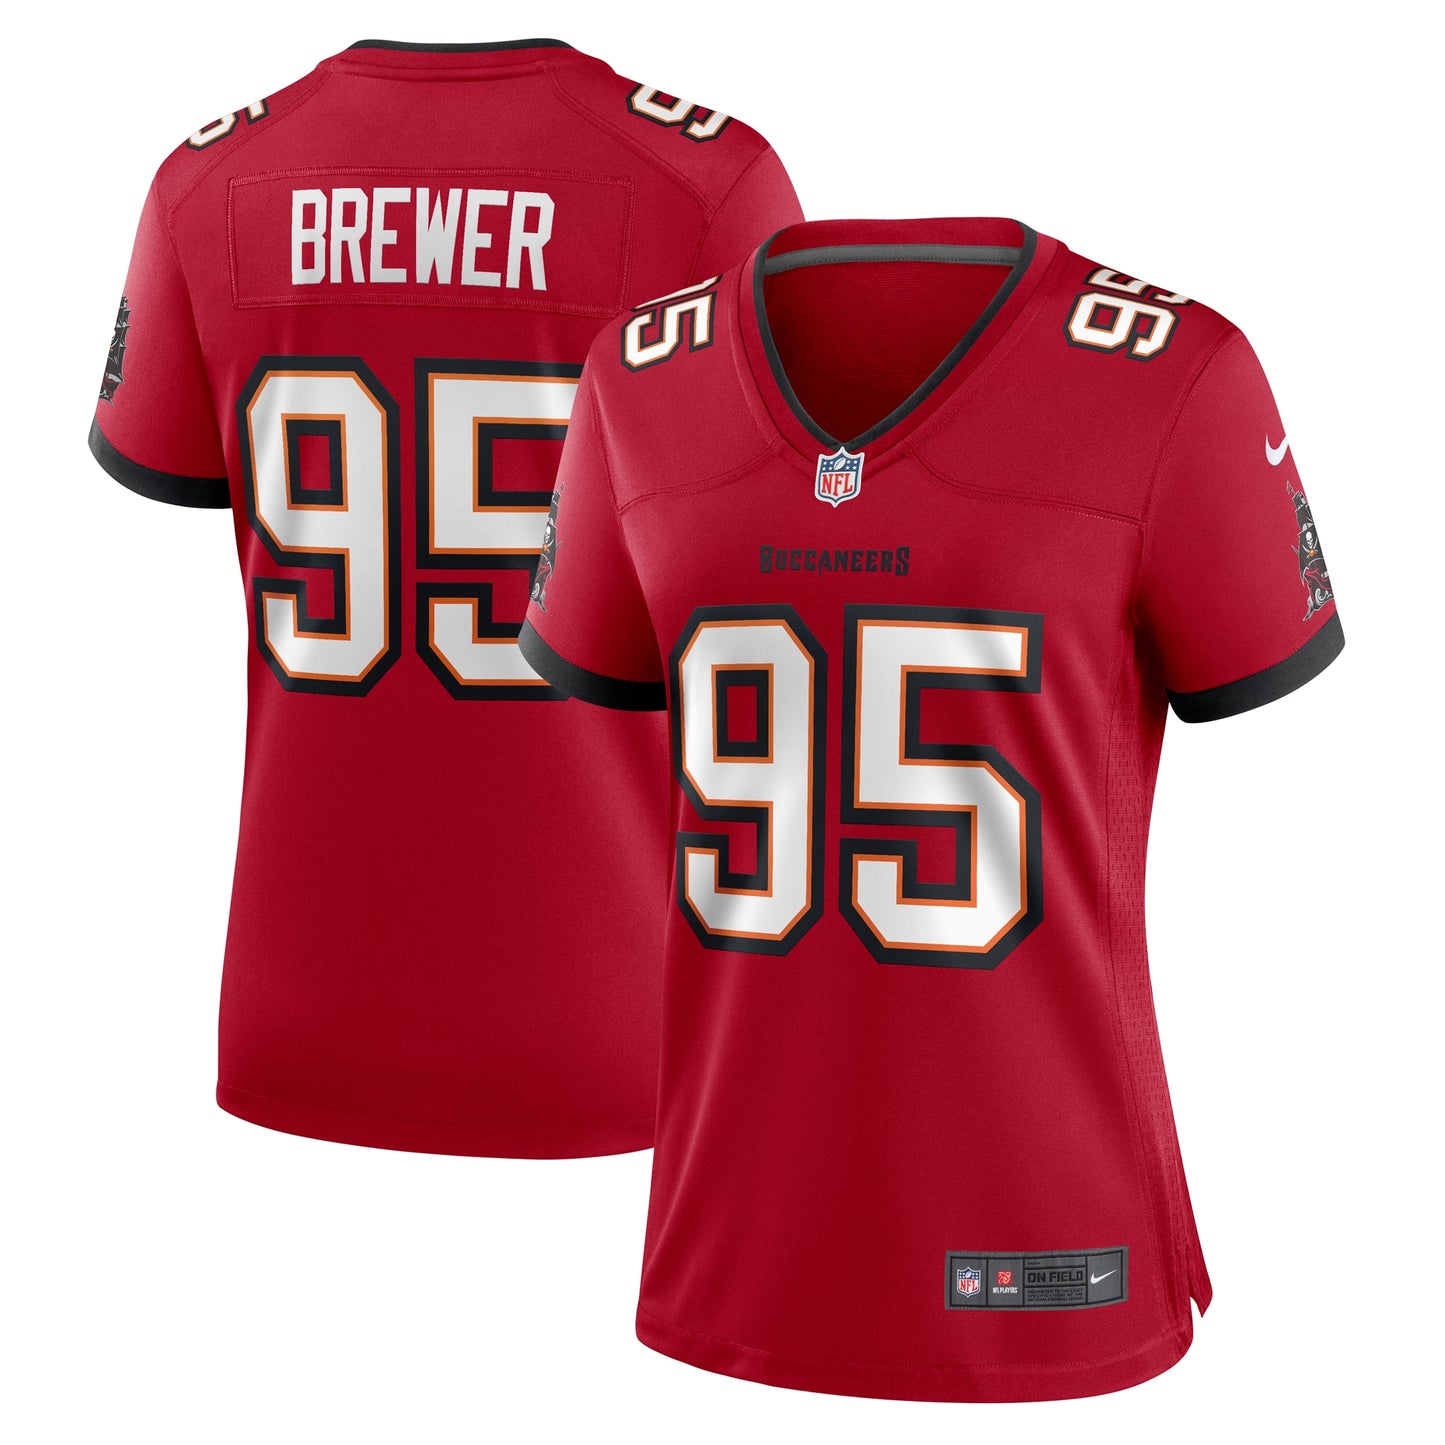 CJ Brewer Tampa Bay Buccaneers Nike Women's Team Game Jersey - Red